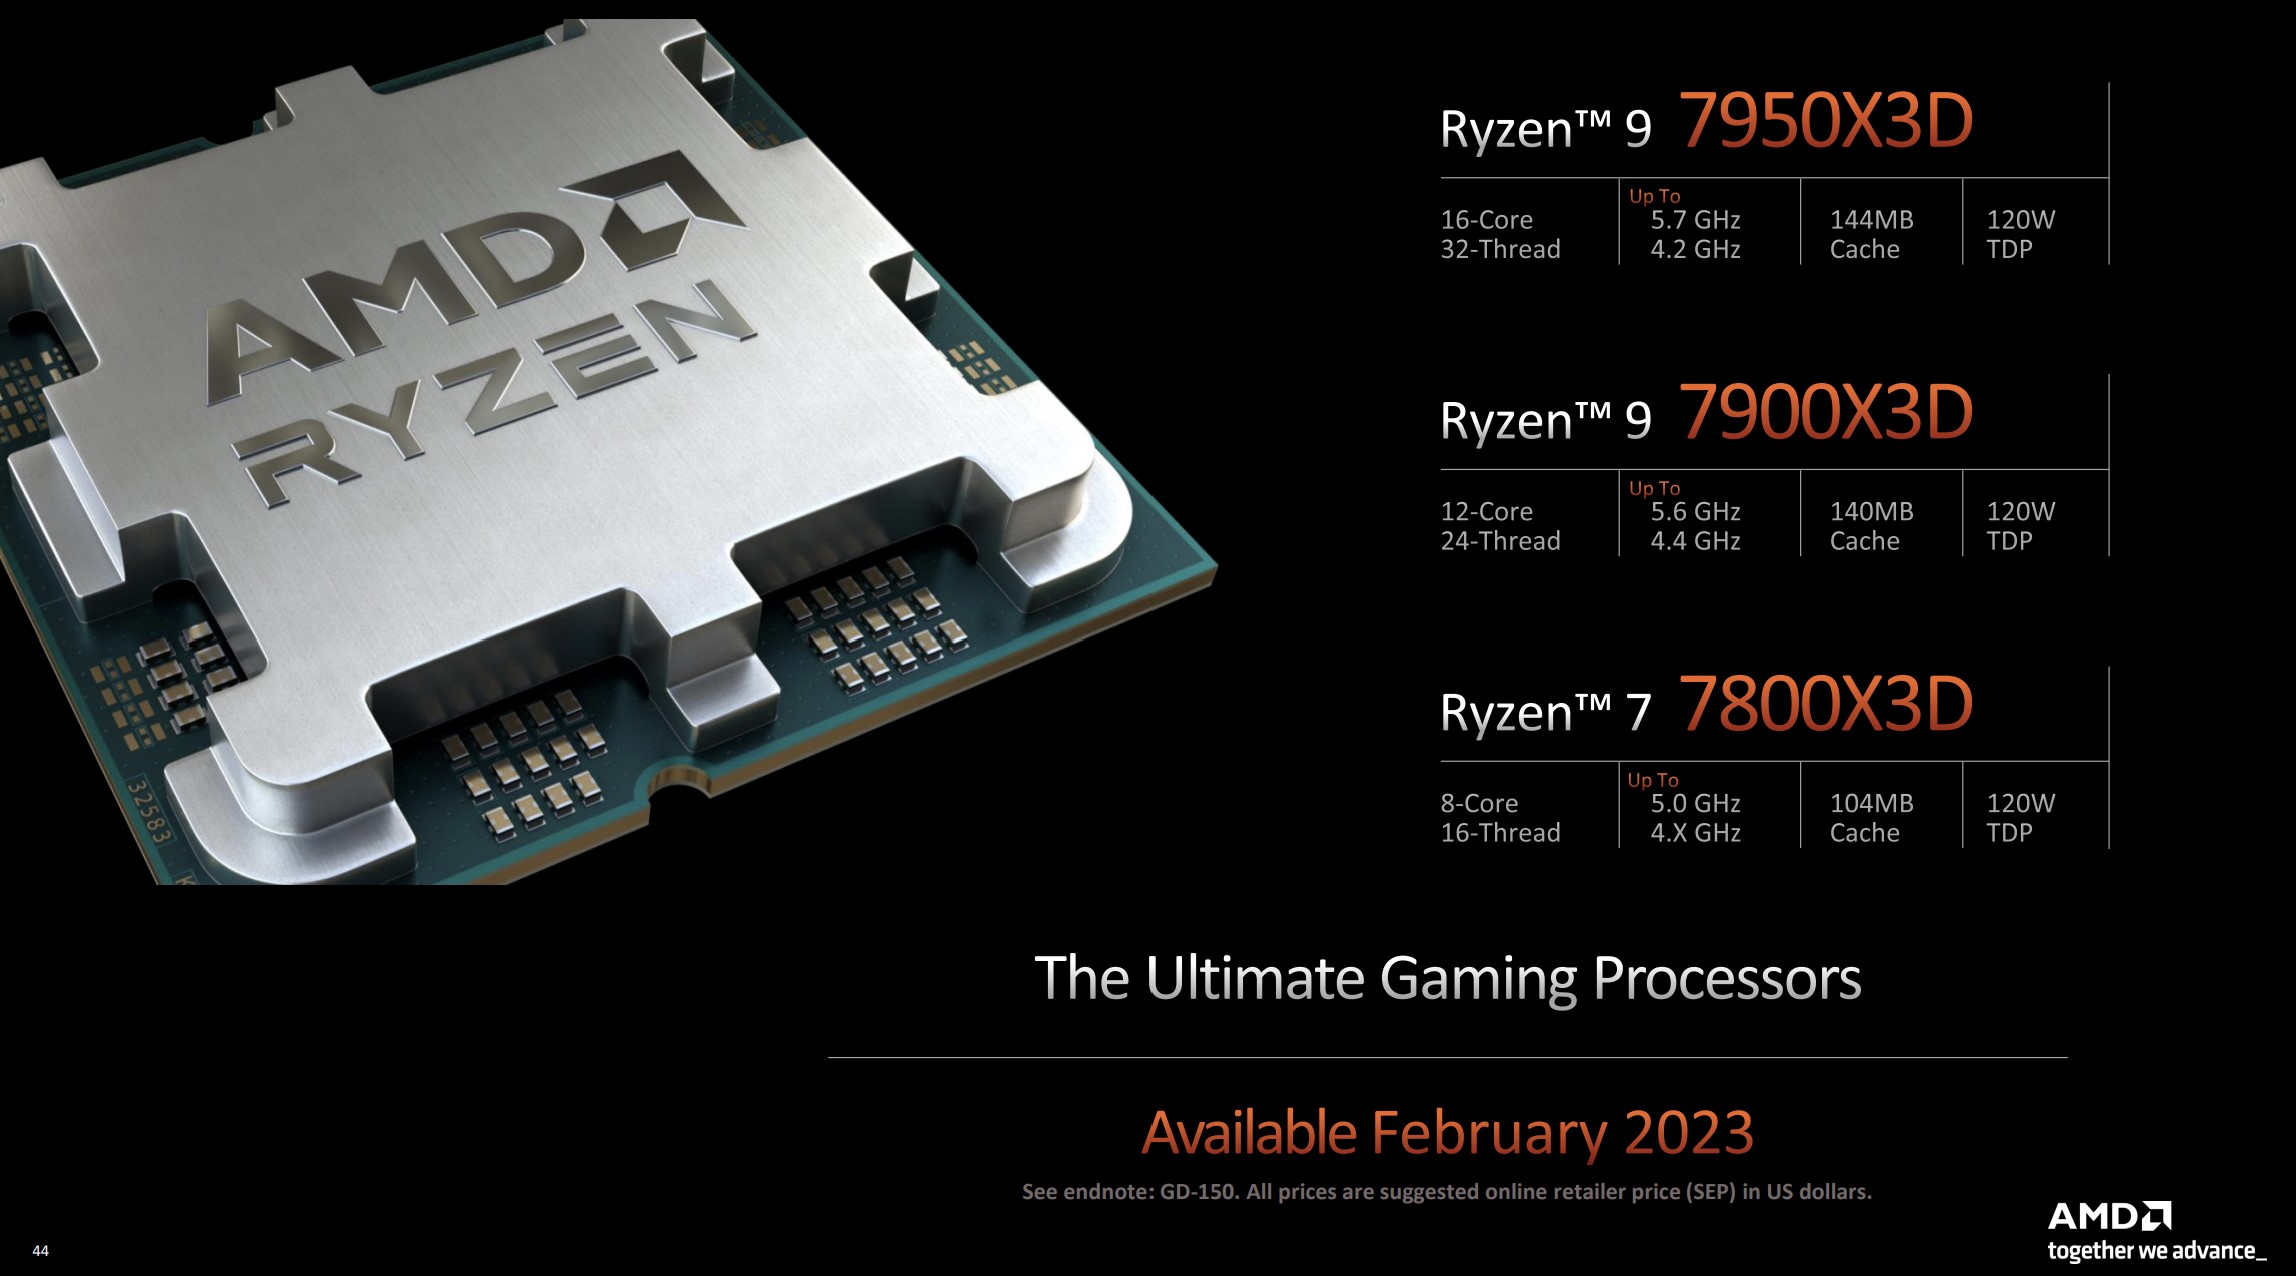 AMD Ryzen™ 9 7950X3D: The World's Fastest Gaming Desktop Processor 